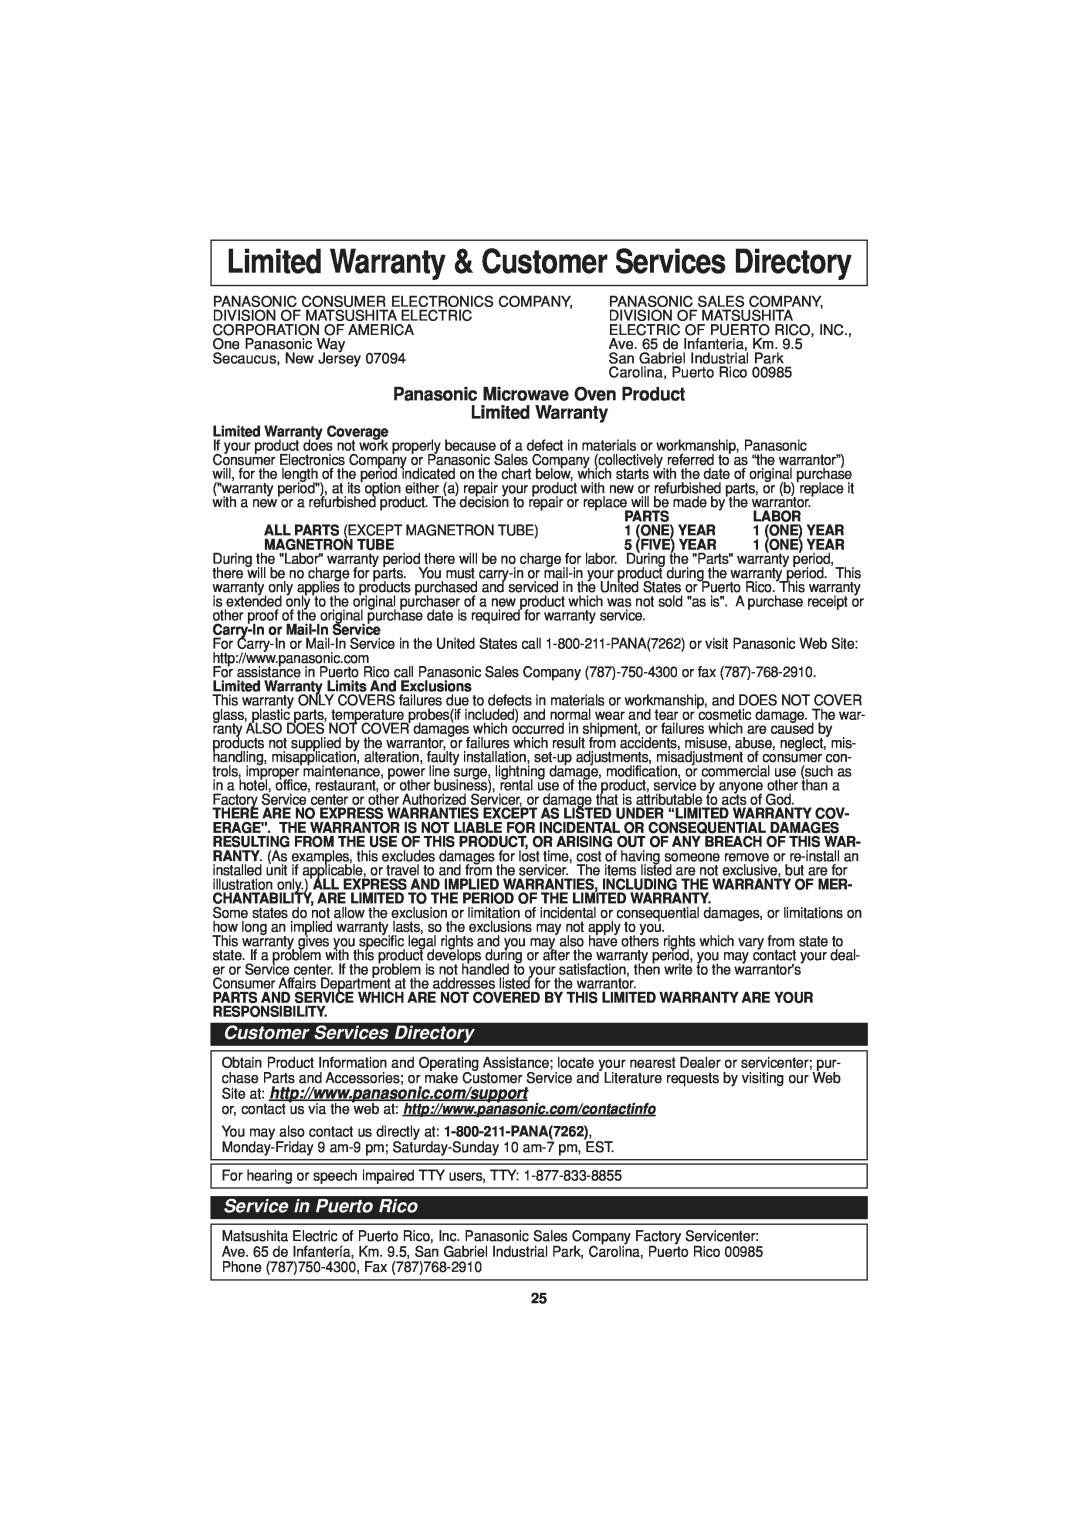 Panasonic NN-H614, NN-H604, NN-H504 Limited Warranty & Customer Services Directory, Service in Puerto Rico 